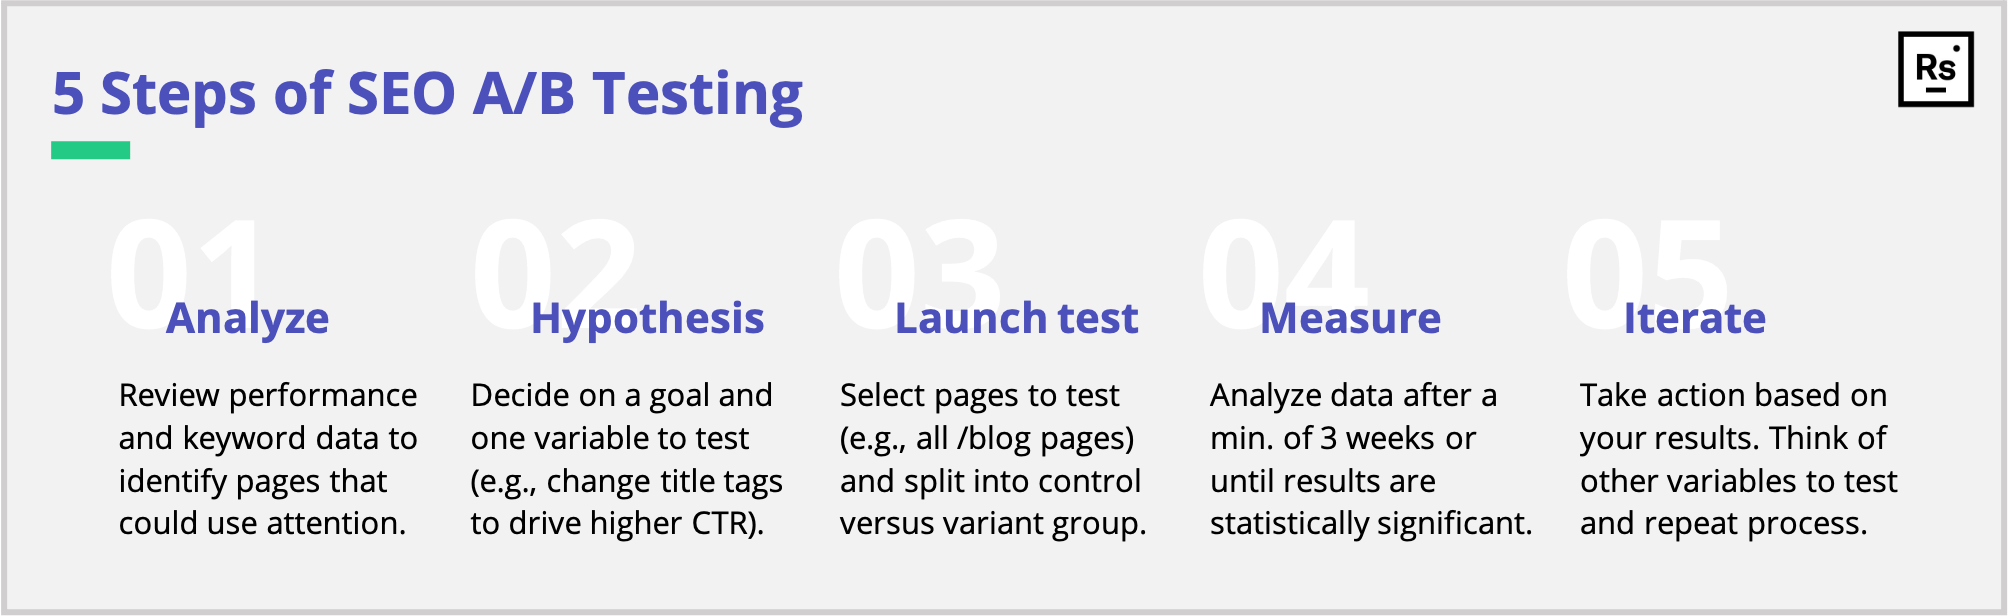 5 steps of seo a/b testing